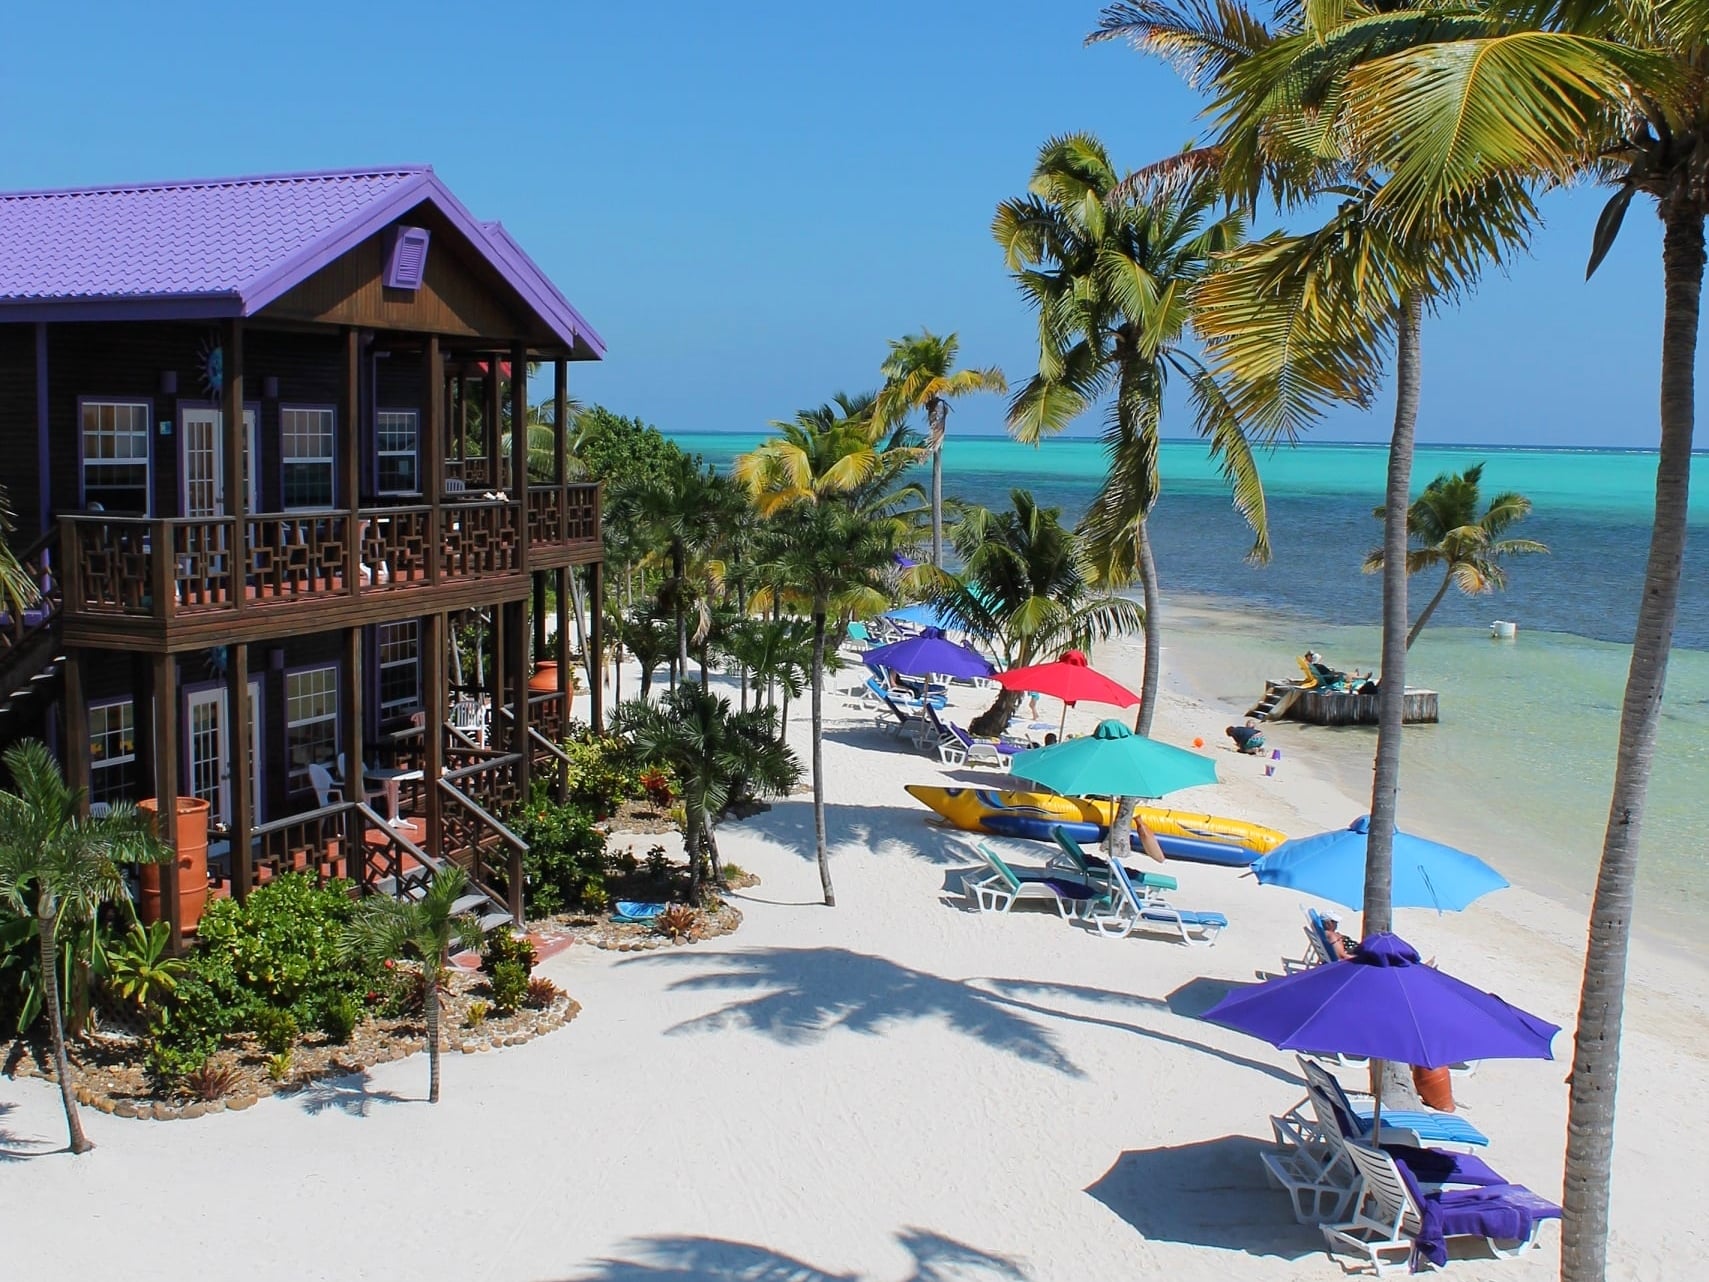 X'tan Ha Beach Resort, Ambergris Caye, Belize